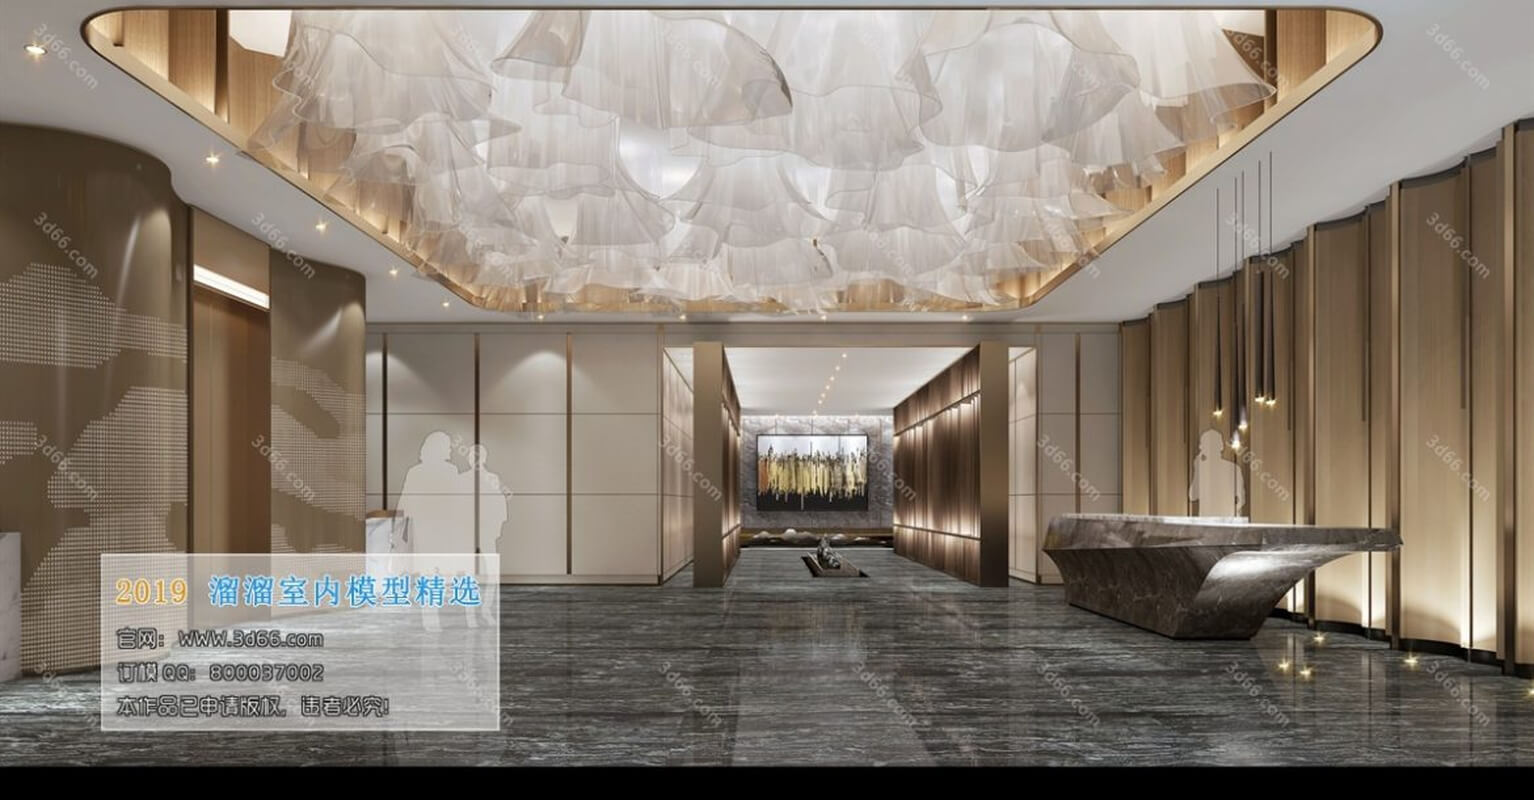 3D66 Lobby & Reception Interior 2019 Style (01)